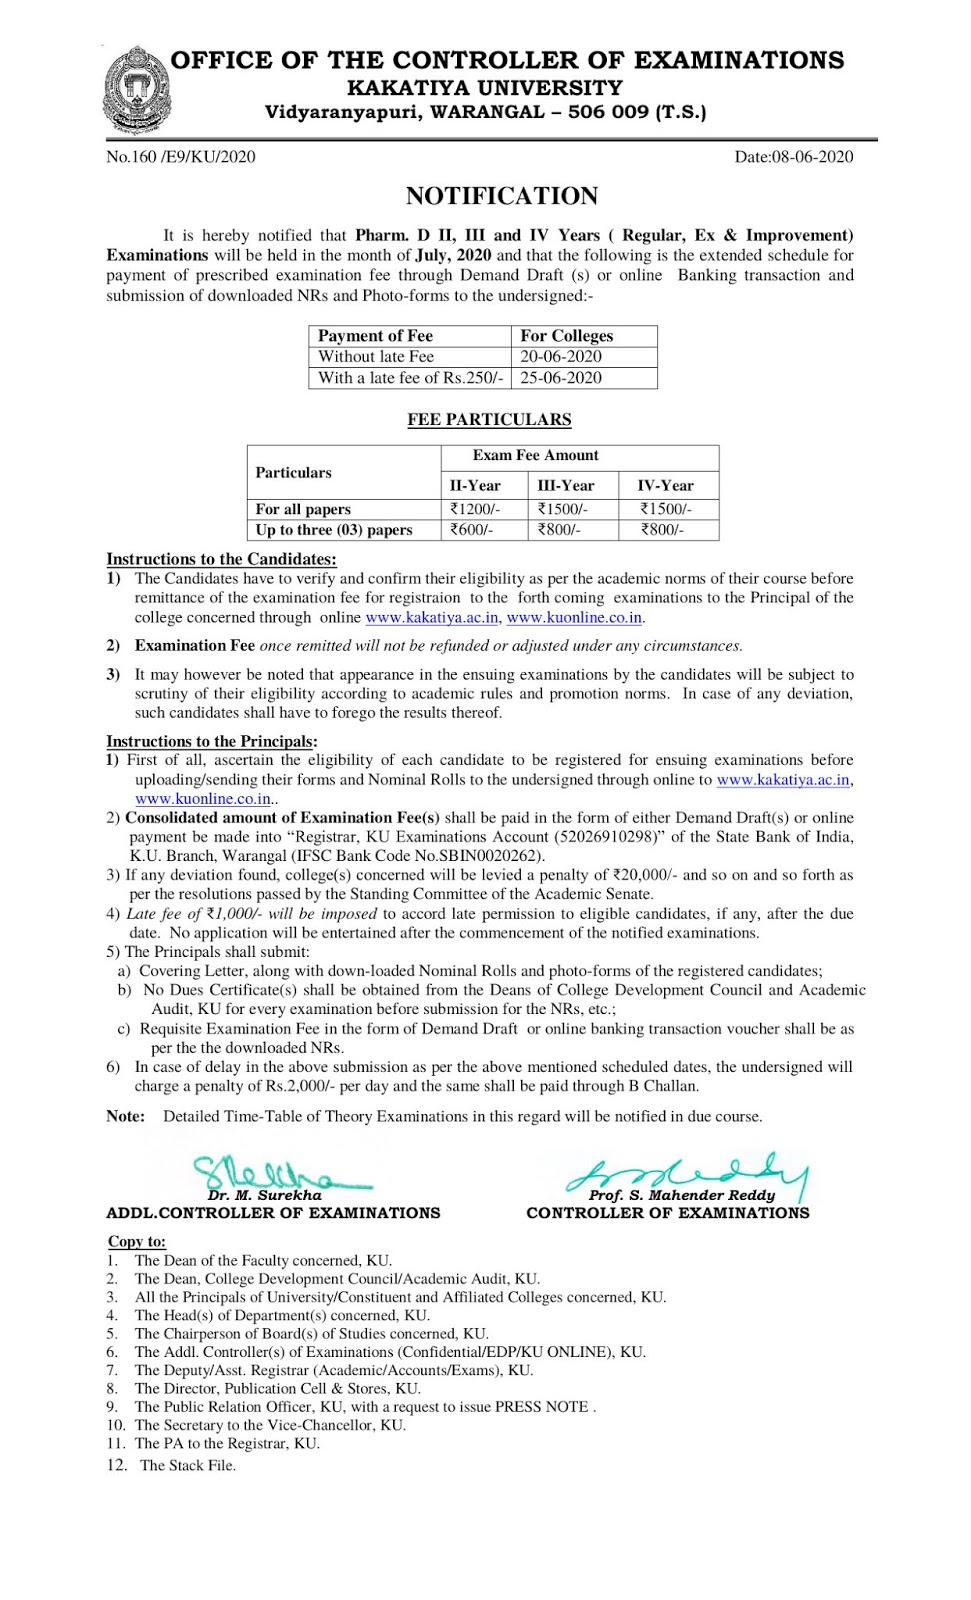 kakatiya university pharm.d 2nd to 4th year july 2020 exam fee notification